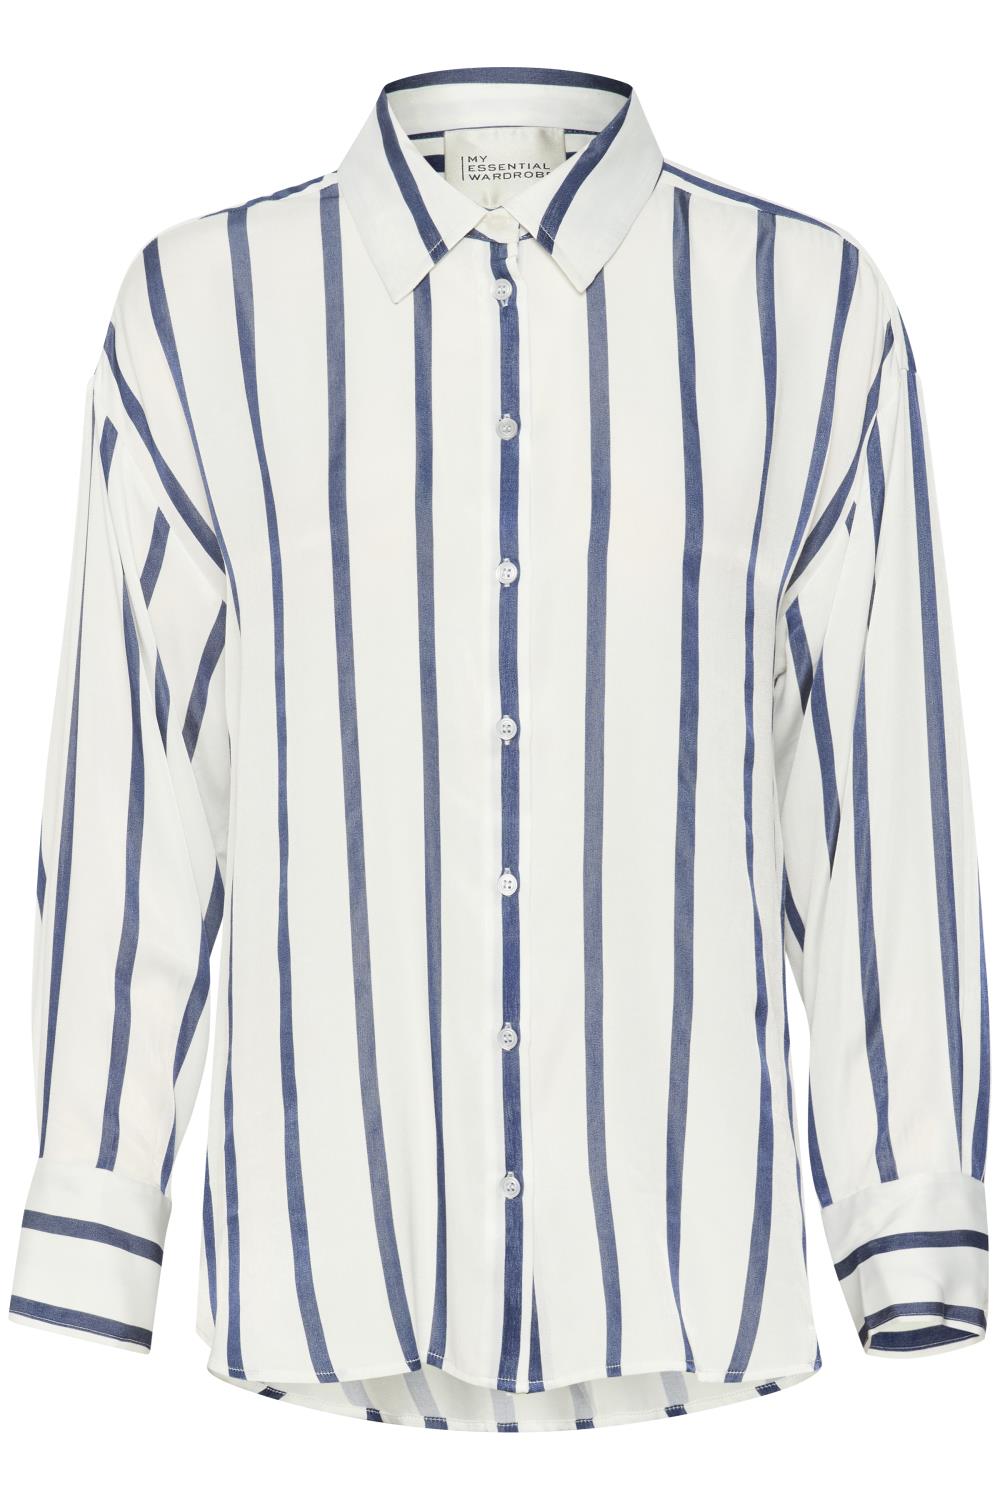 My Essential Wardrobe Mia Shirt, hvit/blå stripet